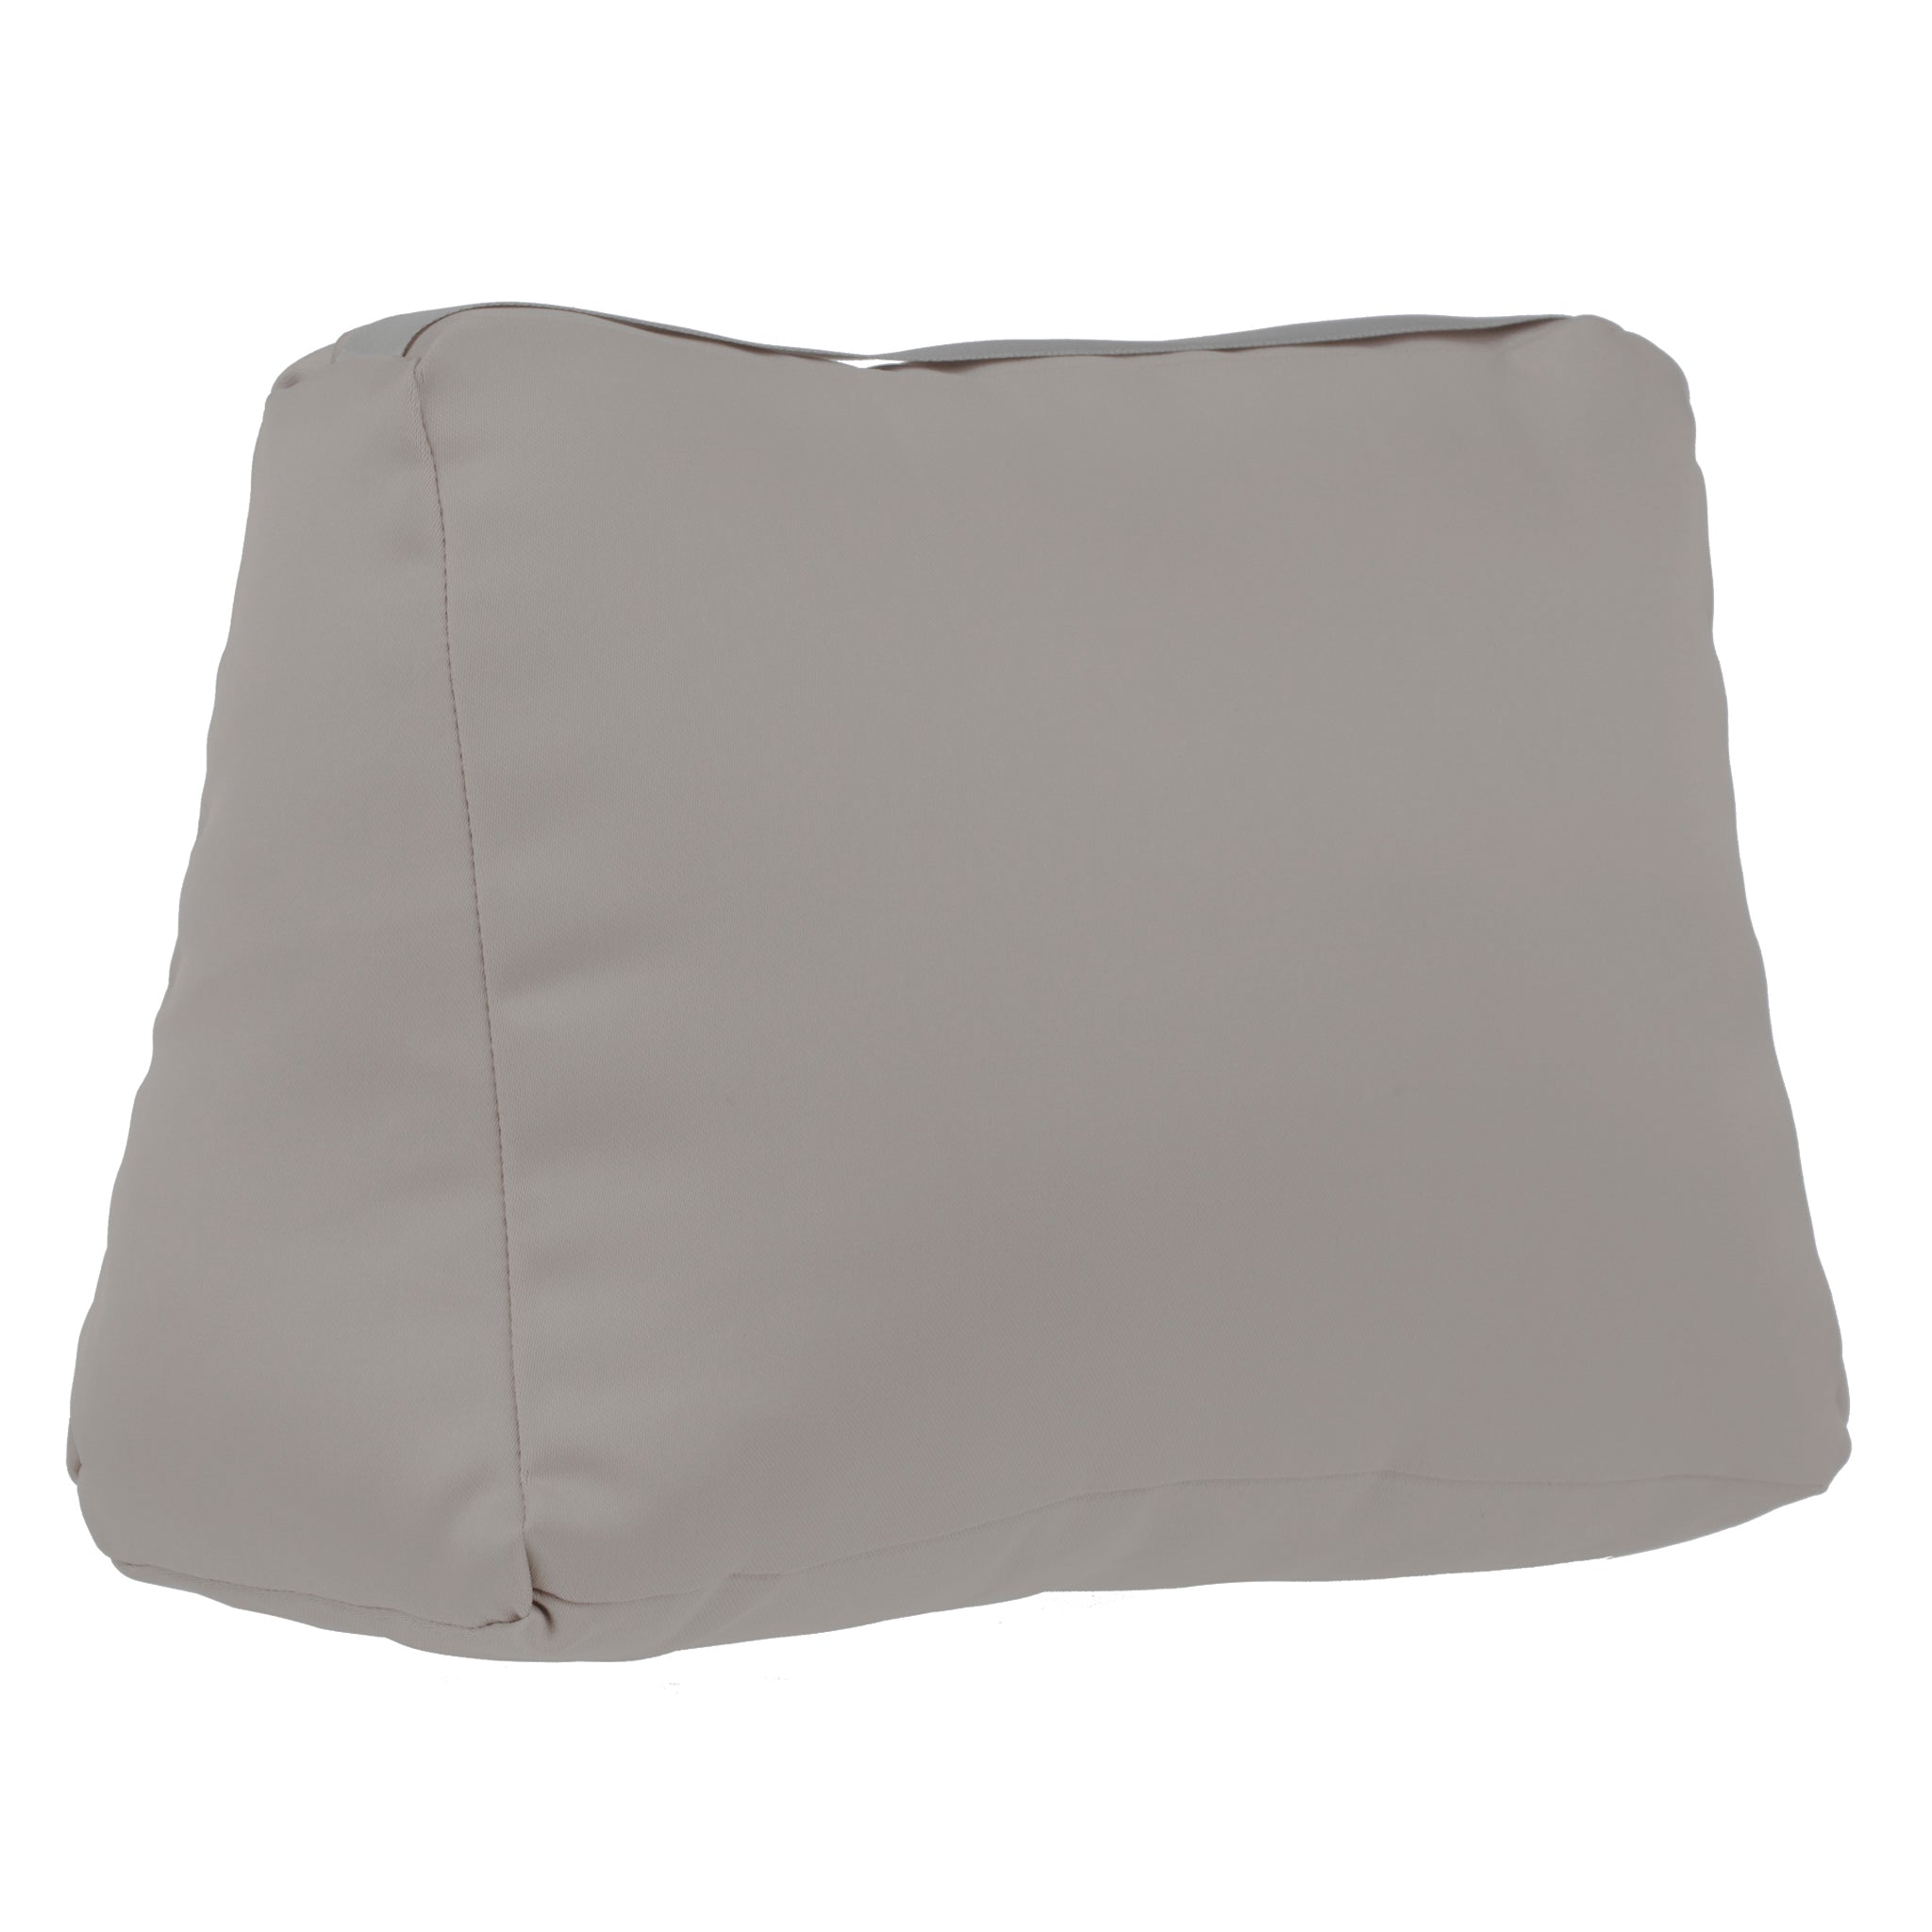 Birkin Bag Pillow Insert - Multiple Sizes